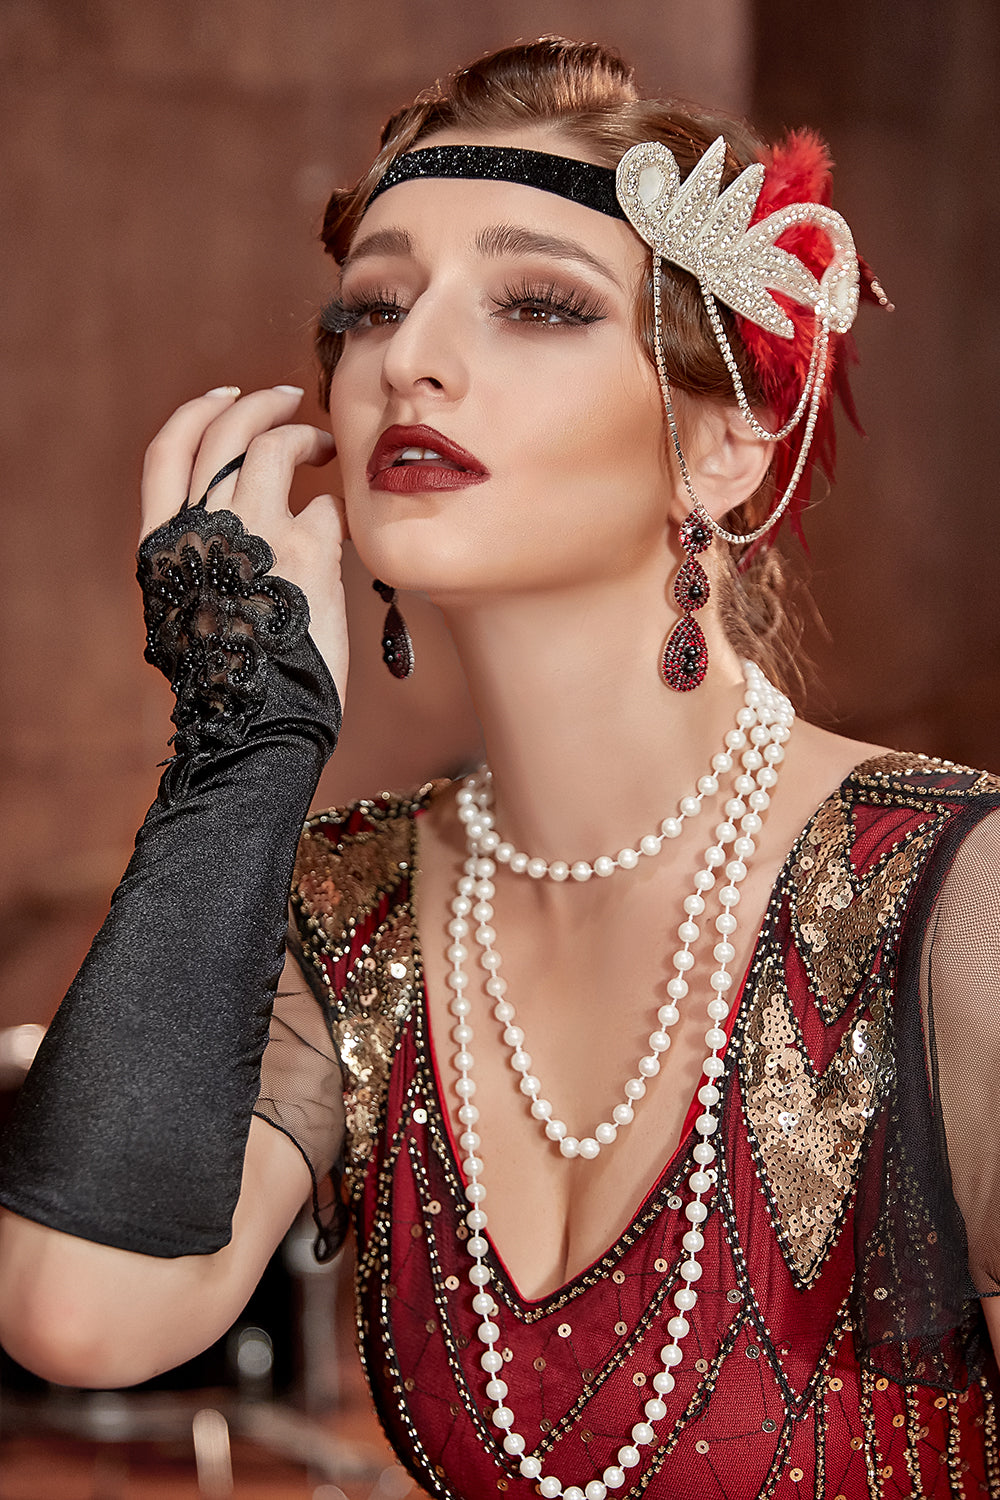 Zapaka Femmes 1920s Costume Rouge Accessoires Set 1920s Flapper